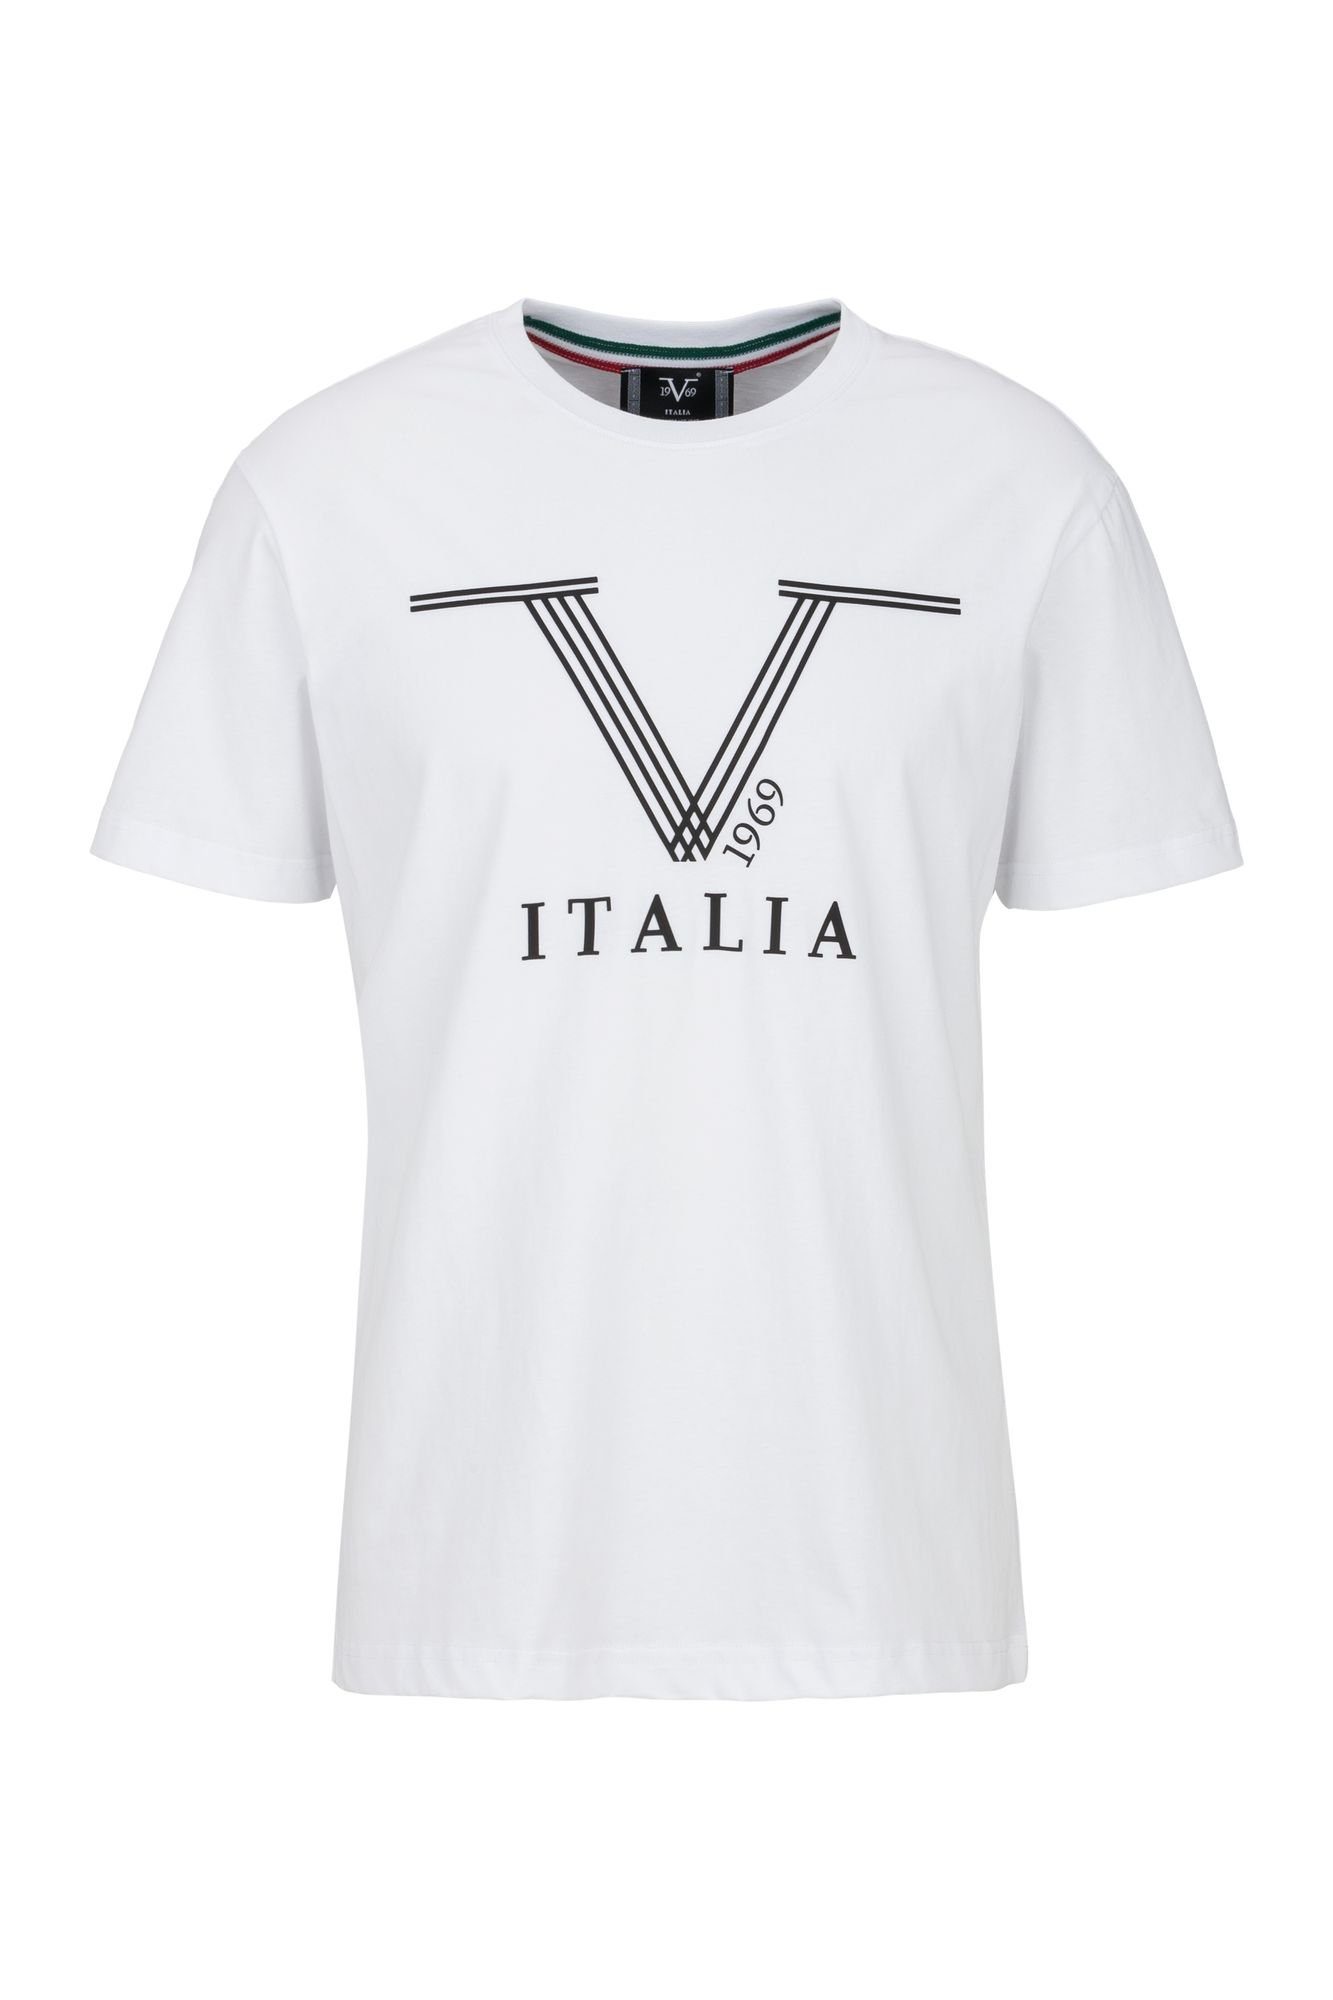 19V69 Italia by Versace T-Shirt by Versace Sportivo SRL - Pierre WHITE